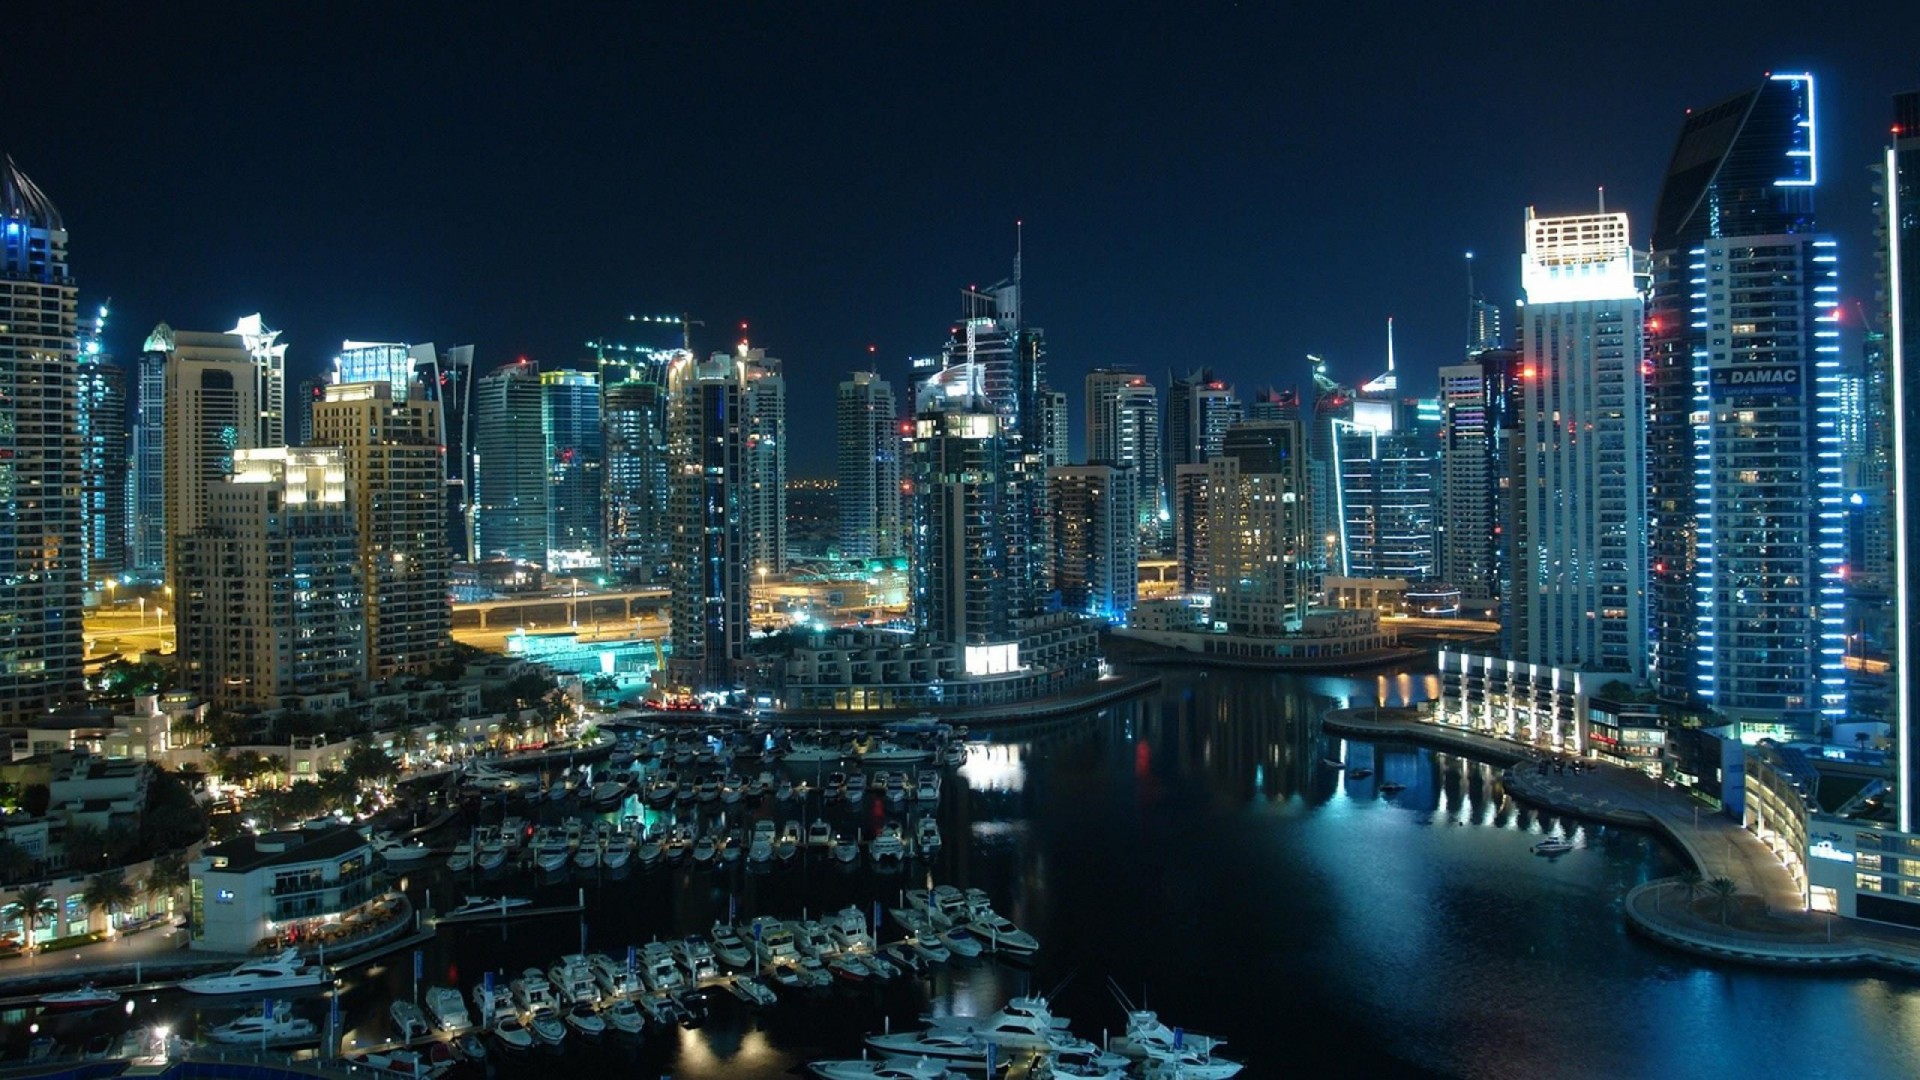 131734 4K, Dubai Marina, Canal city, Nightscape - Rare Gallery HD Wallpapers